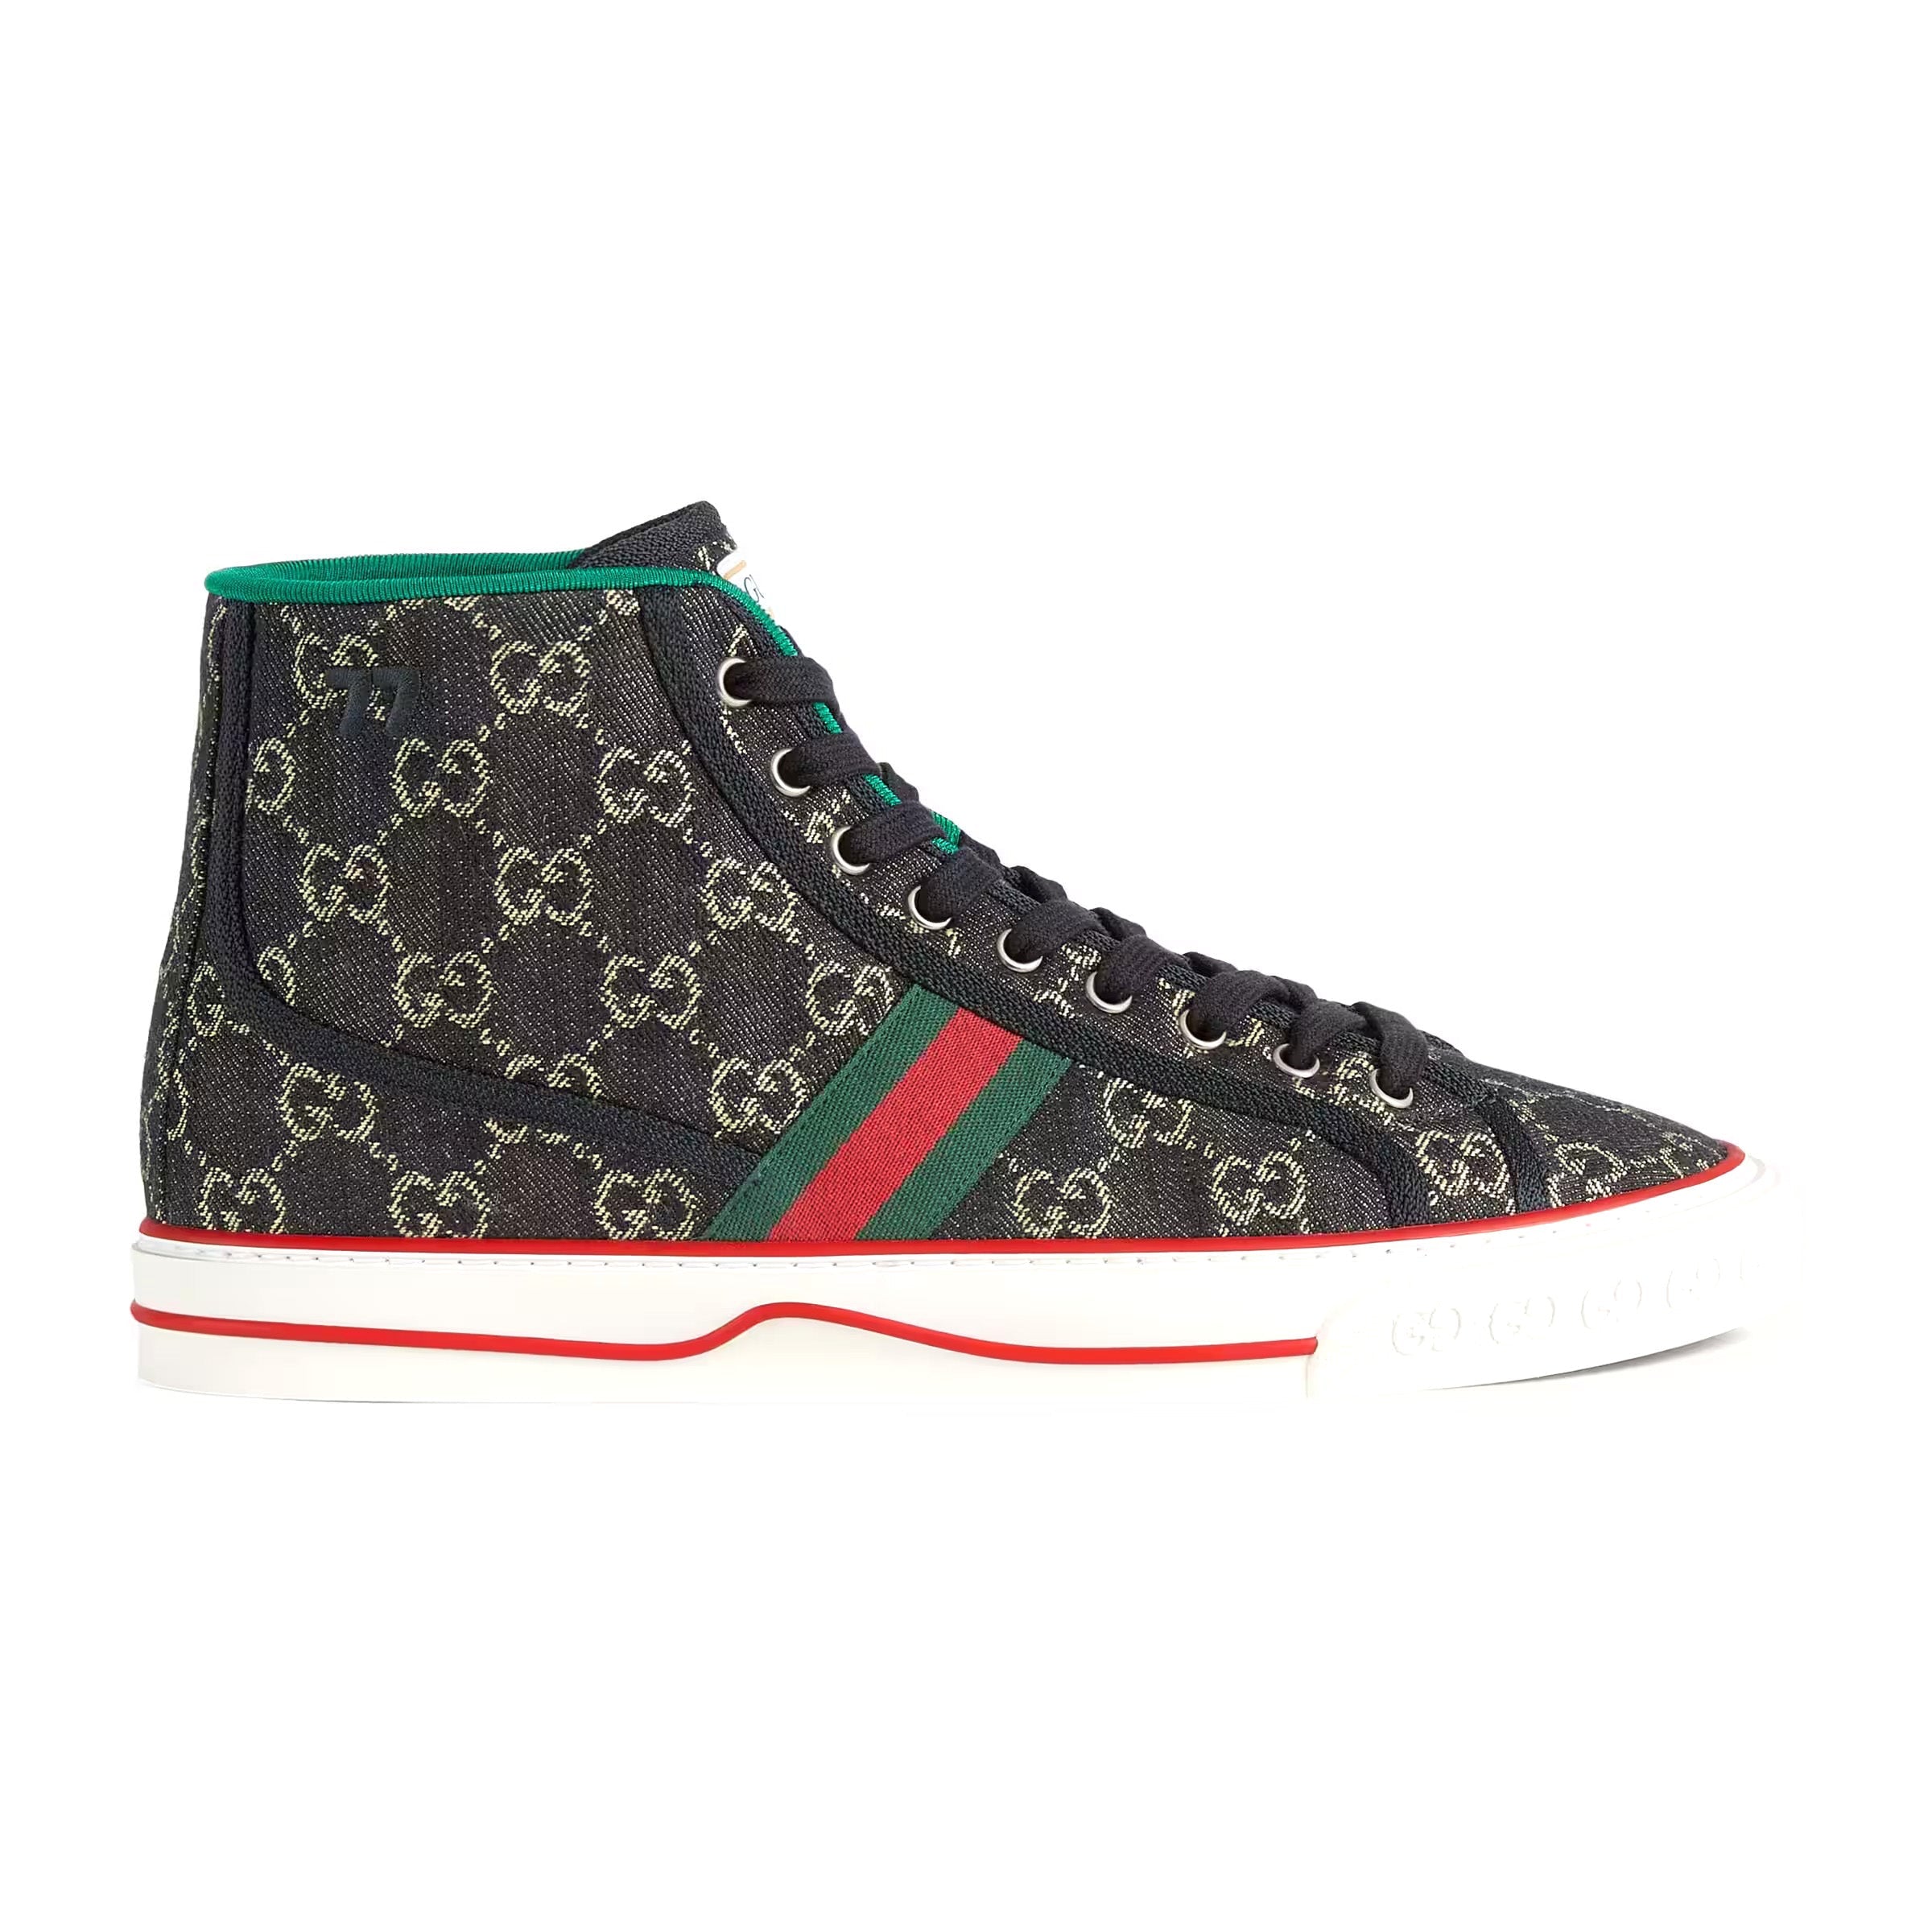 Gucci 625807 UN310 1290 Men's Shoes Black & Ivory Jacquard Denim Tenni ...